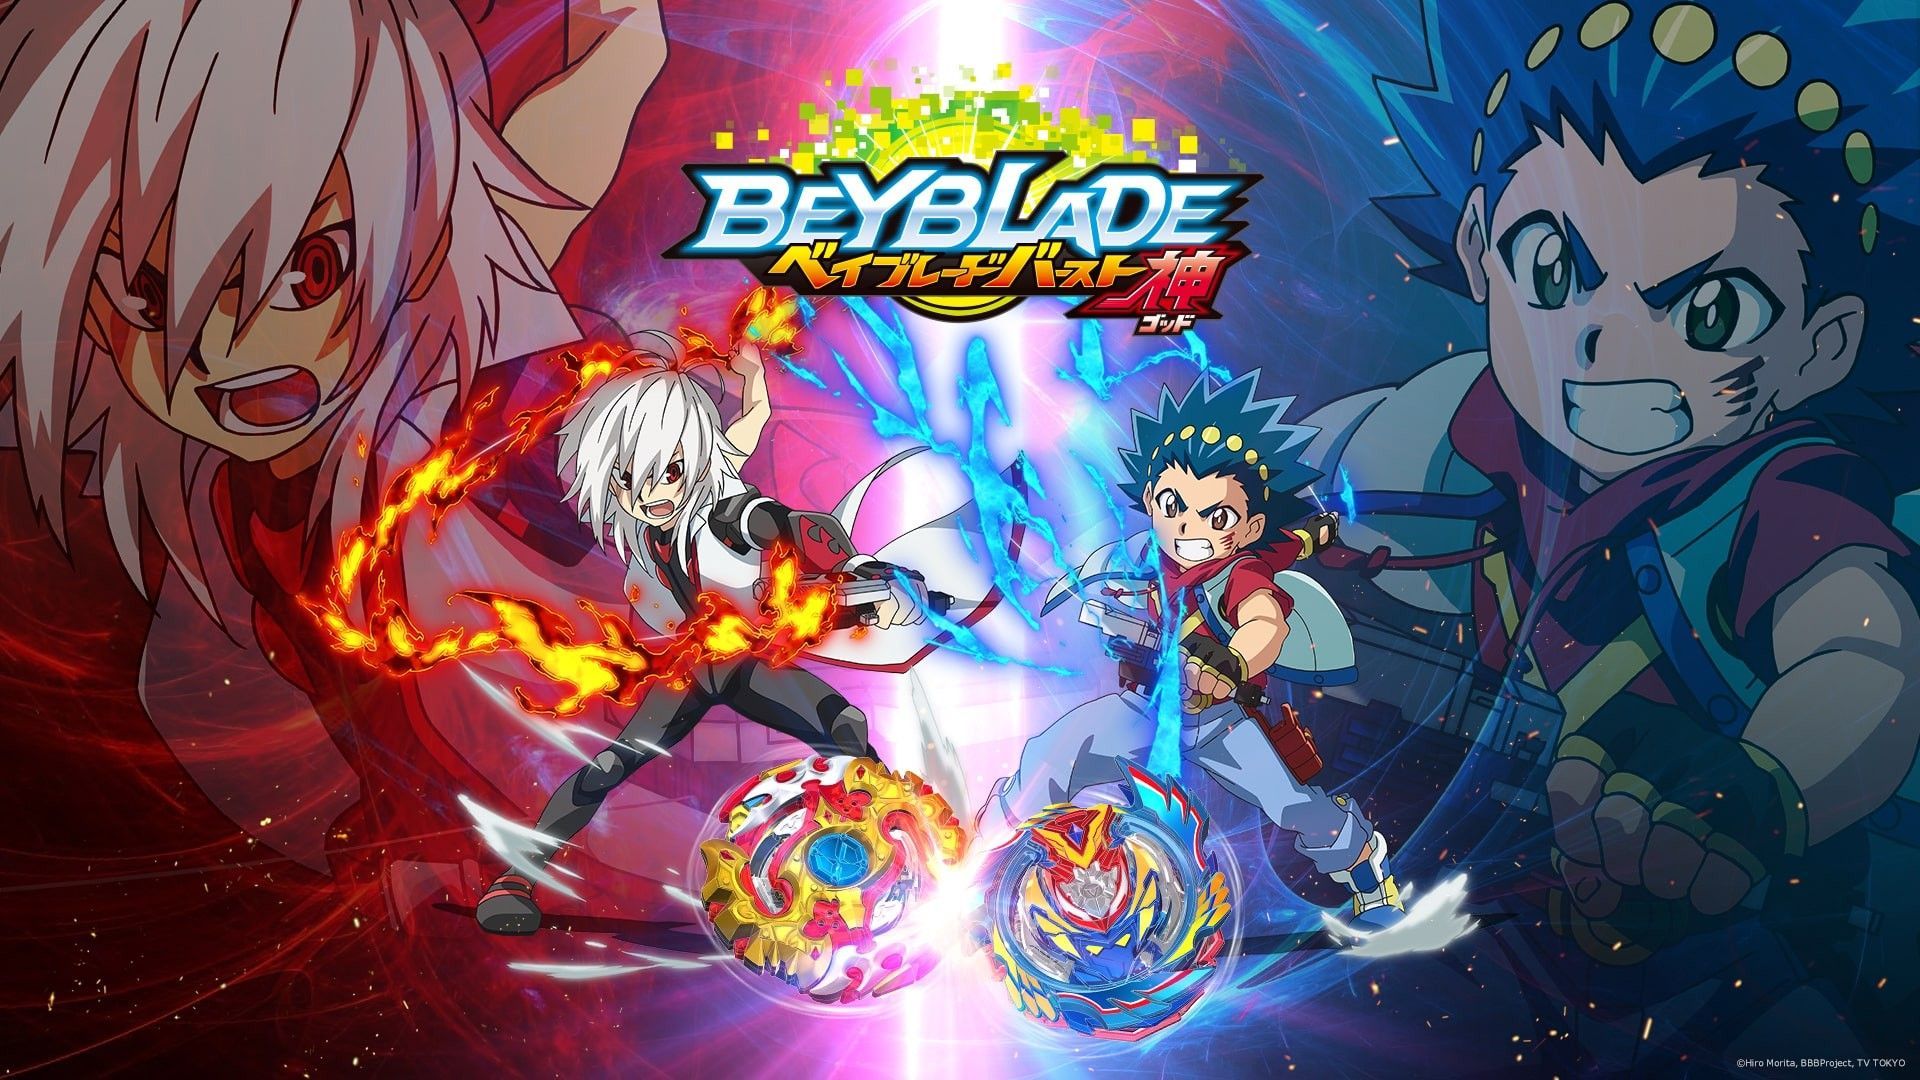 Pin By Anime4ever On Beyblade Burst Bakugan Battle Planet. Anime, Beyblade Characters, Anime Boy